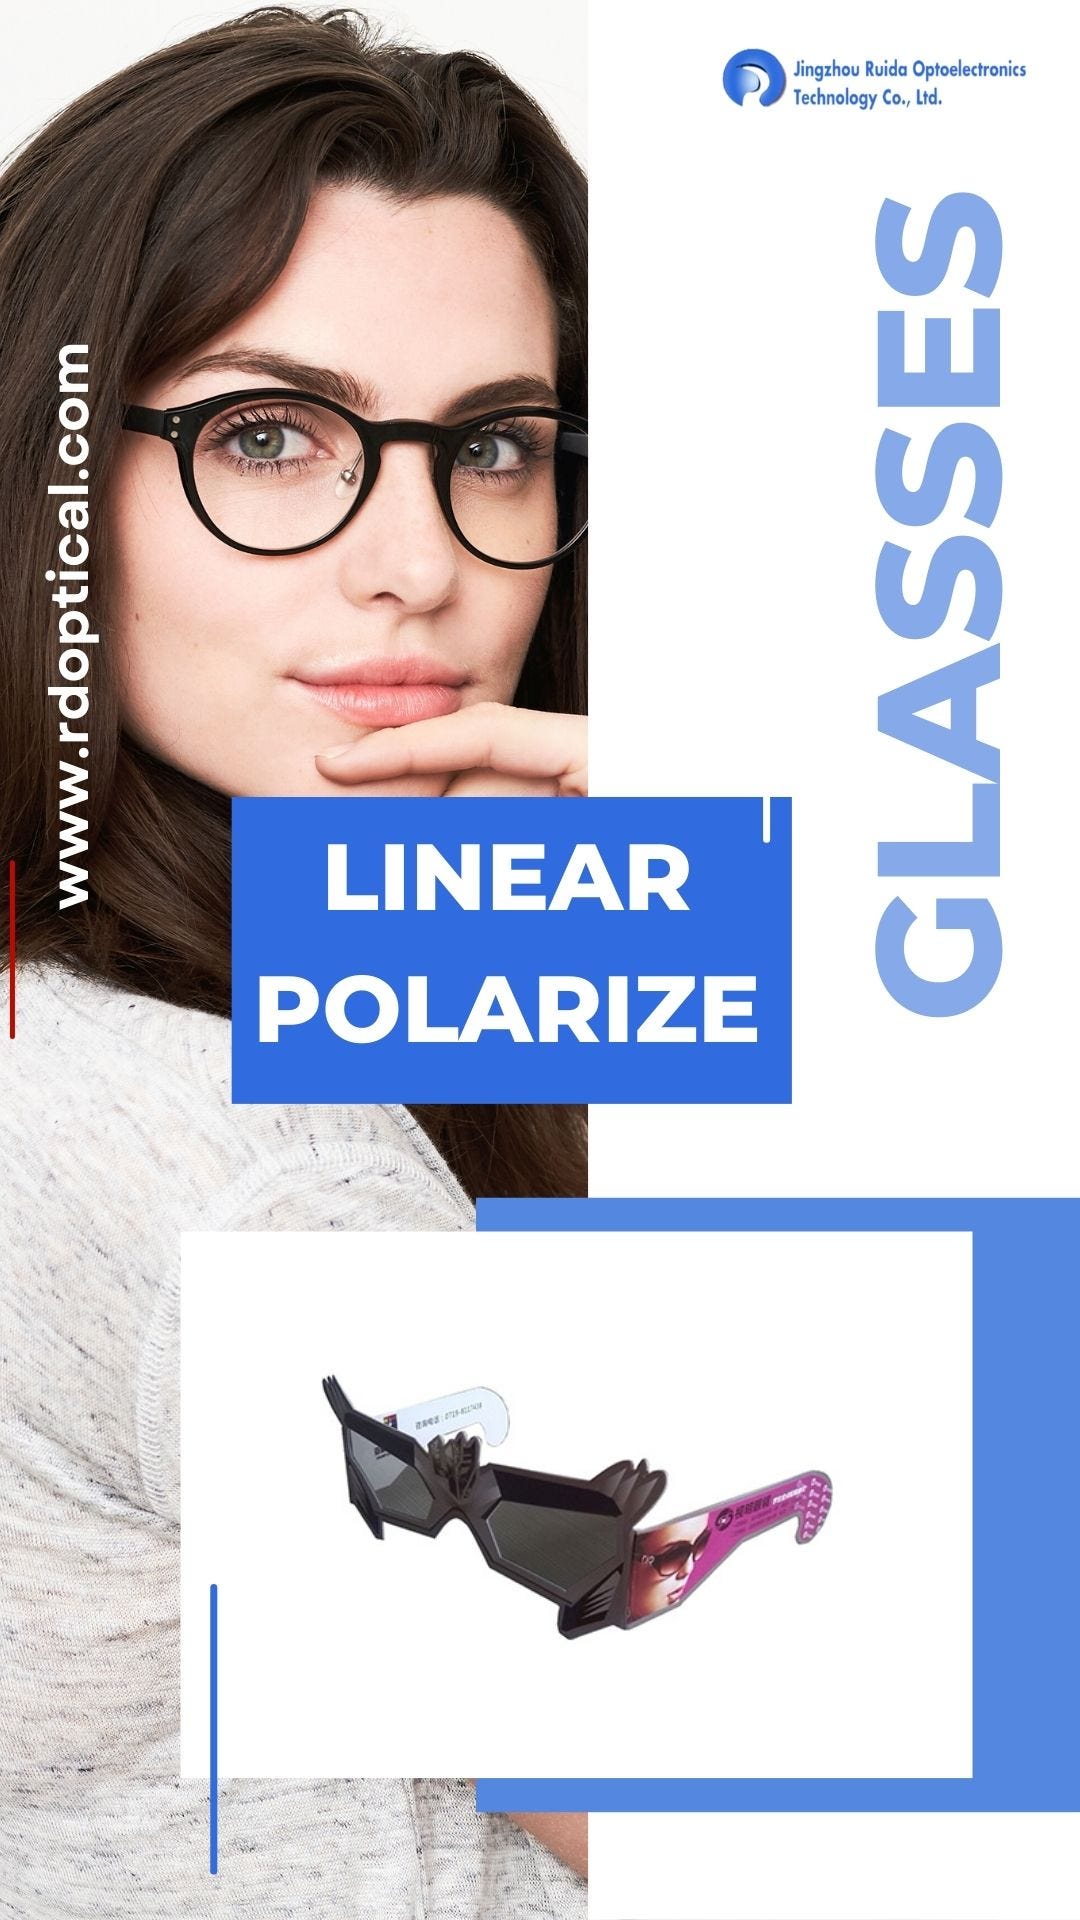 Linear Polarized Glasses - Ruida Optoelectronics Technology Co